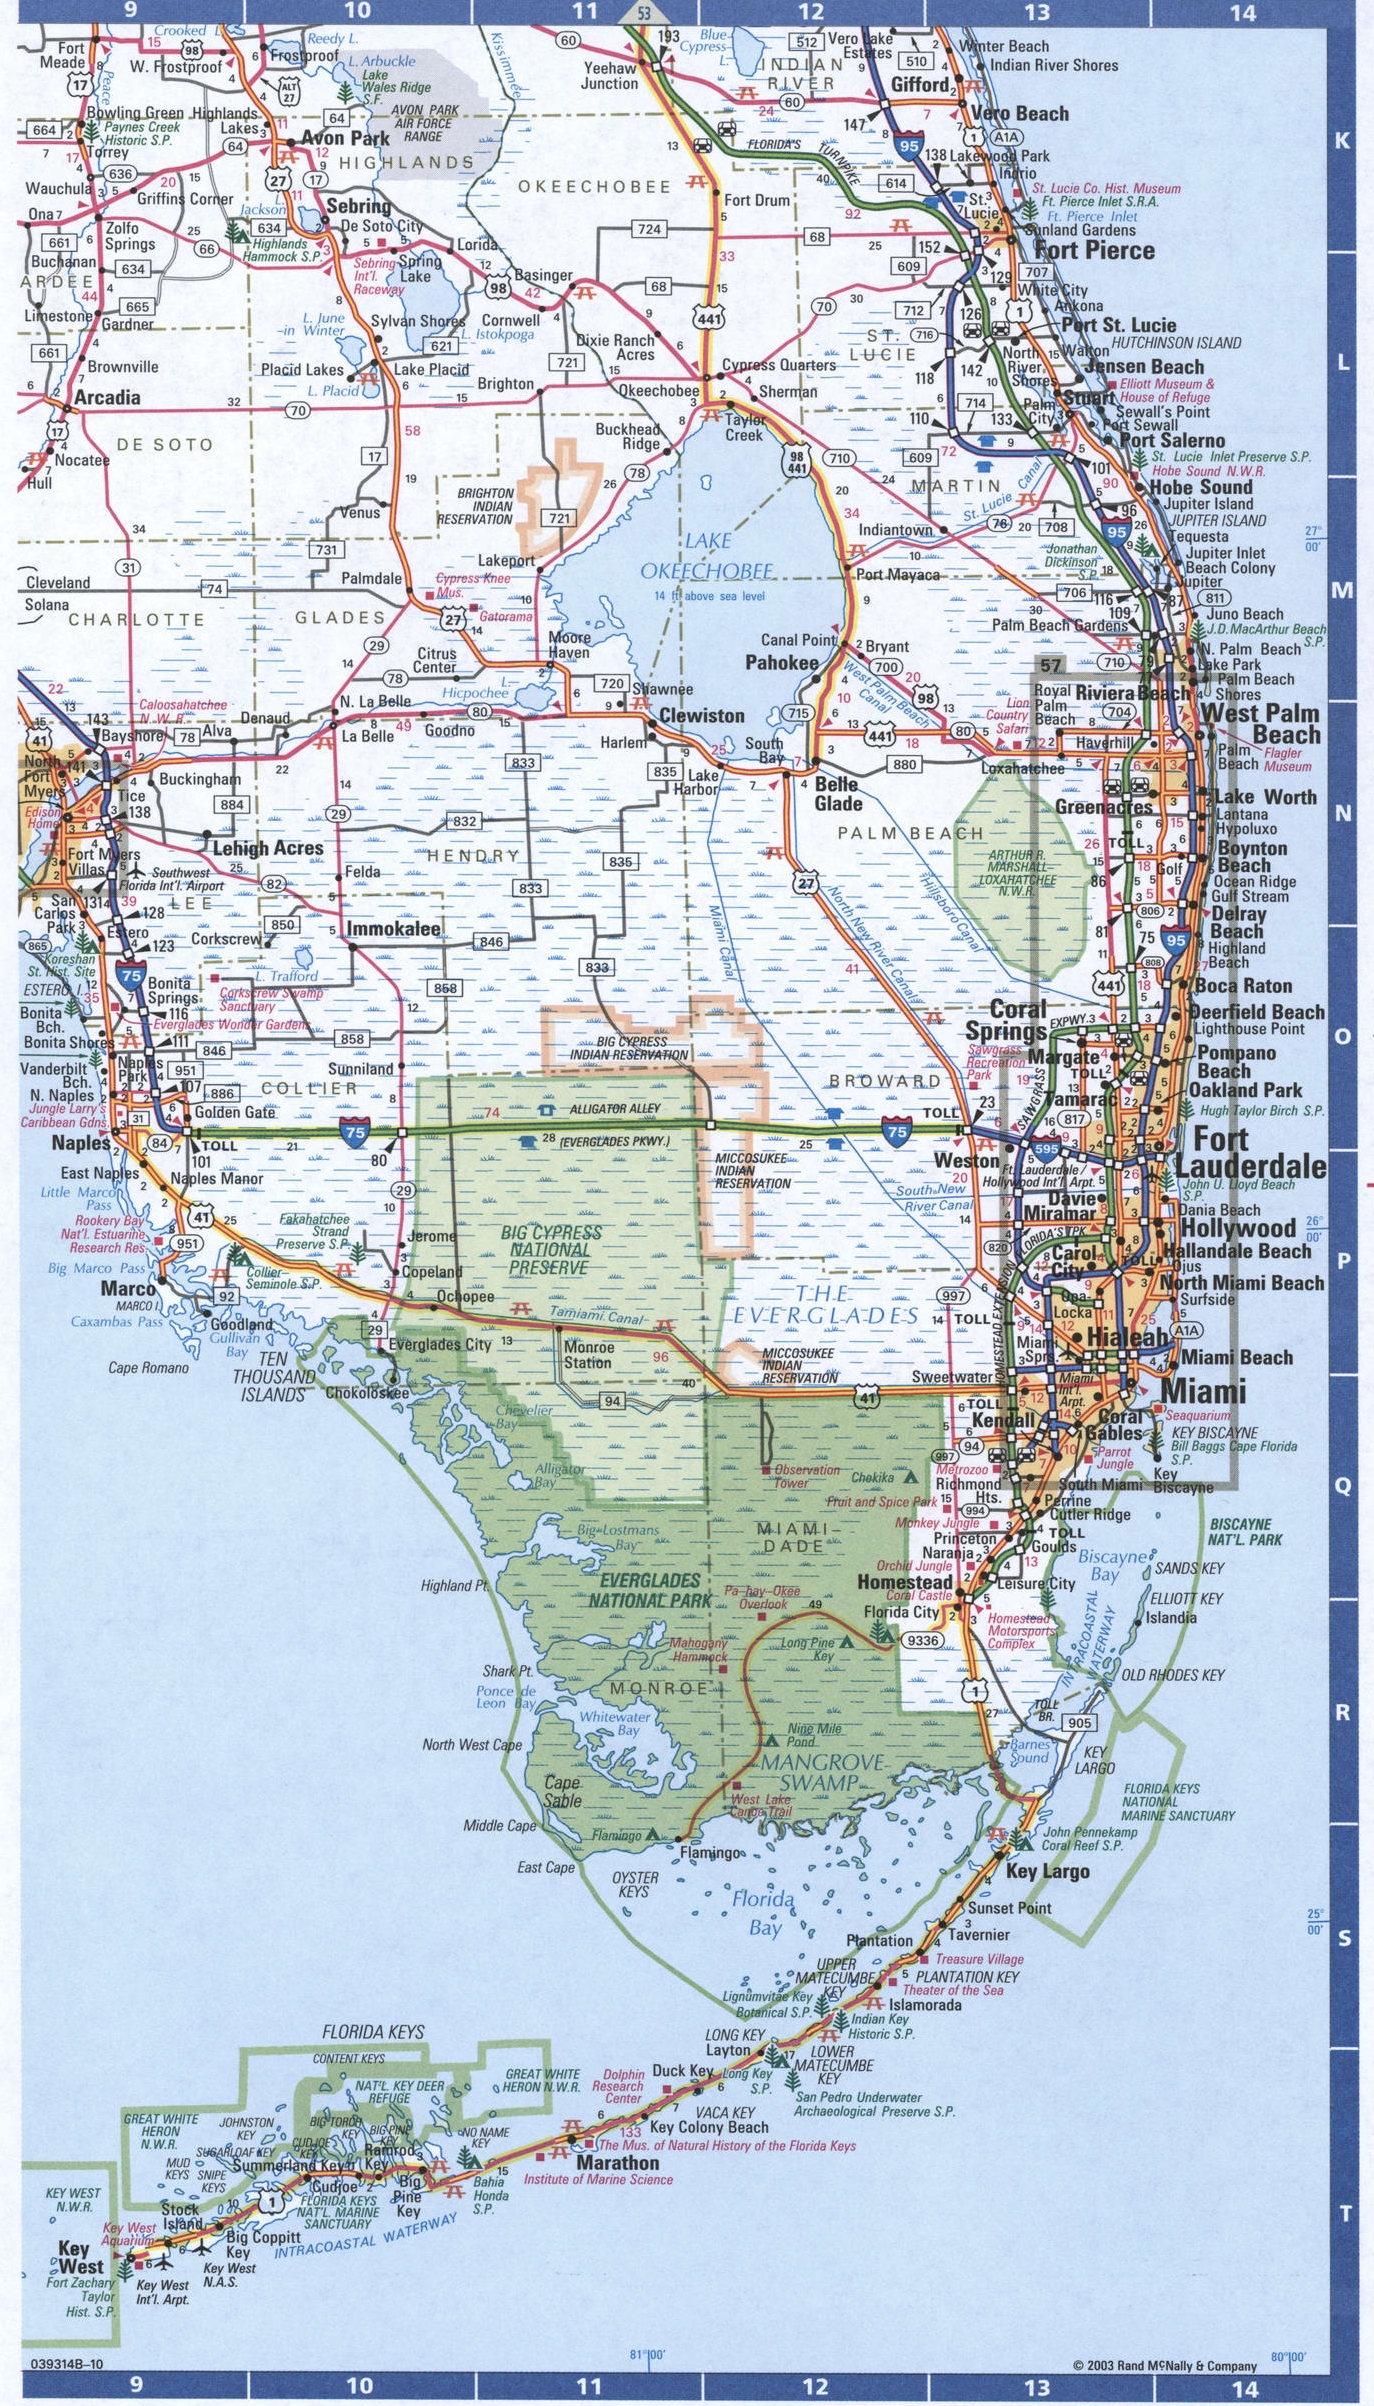 South Florida road map